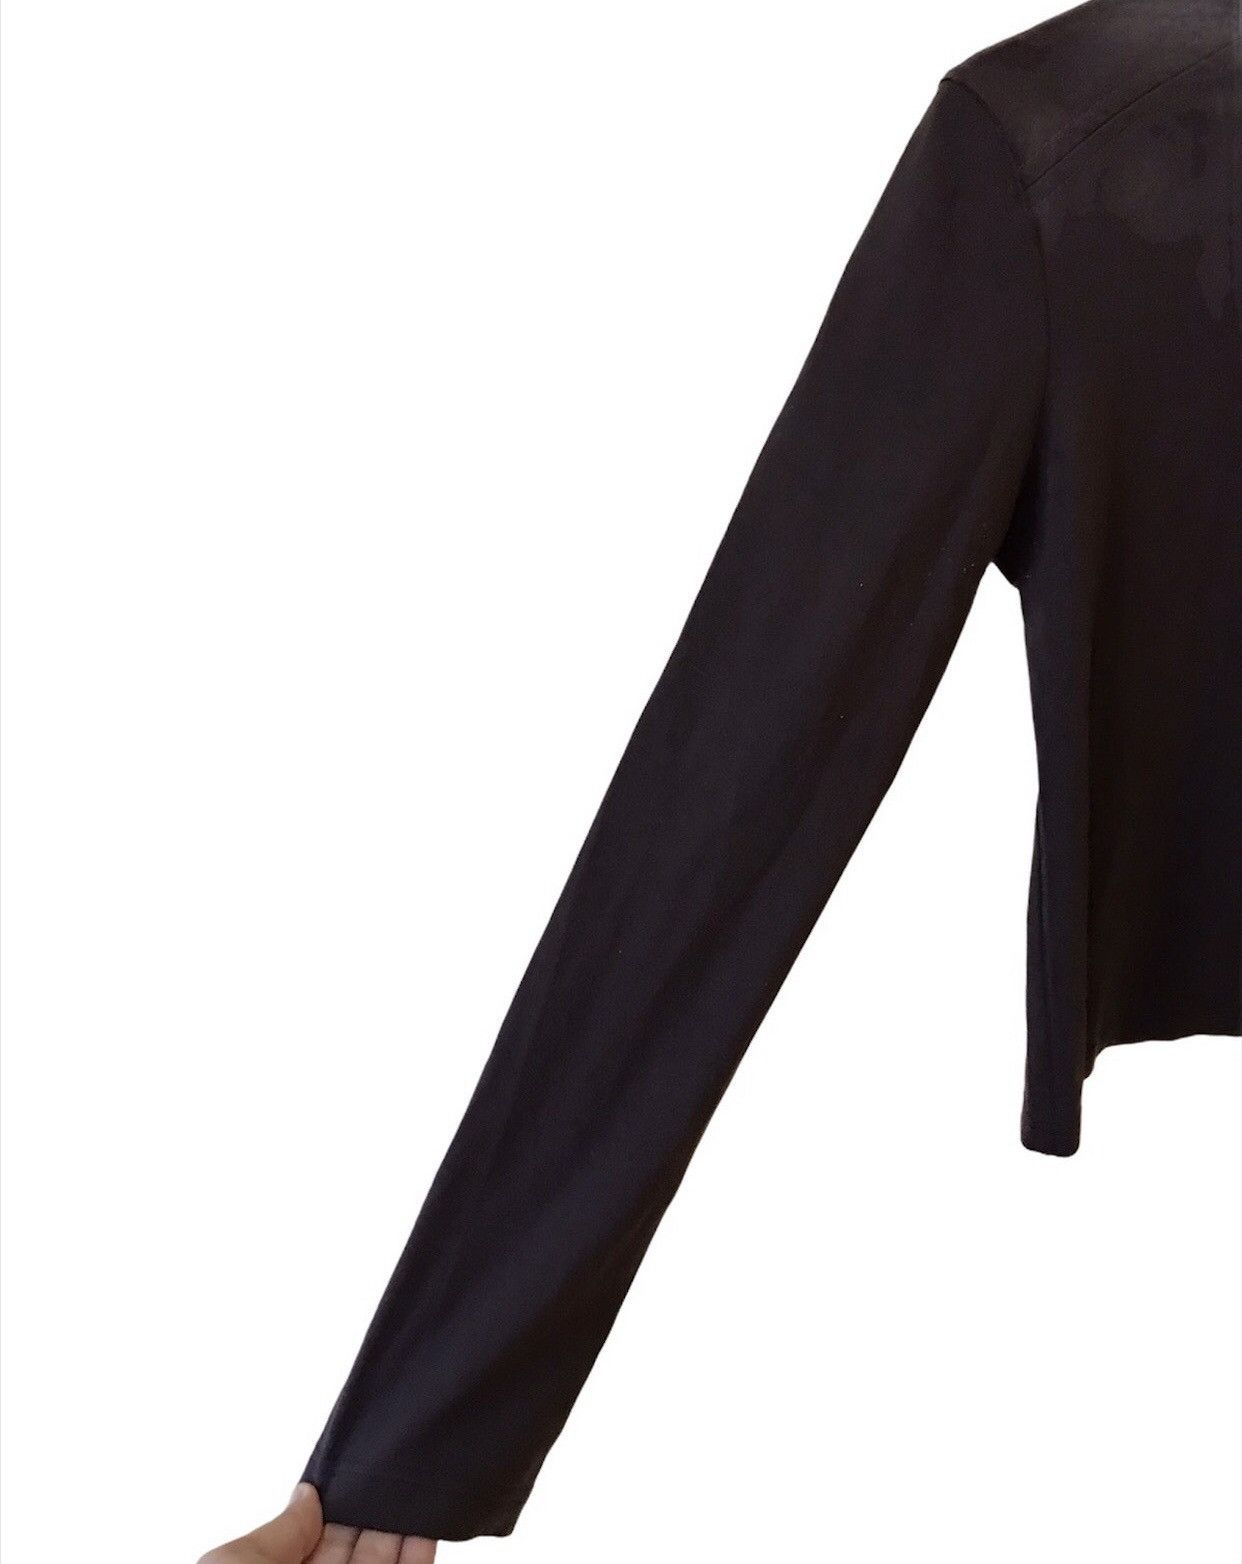 Fendi Fendi Small Logo V-Neck Long Sleeve Tee Size M / US 6-8 / IT 42-44 - 3 Thumbnail